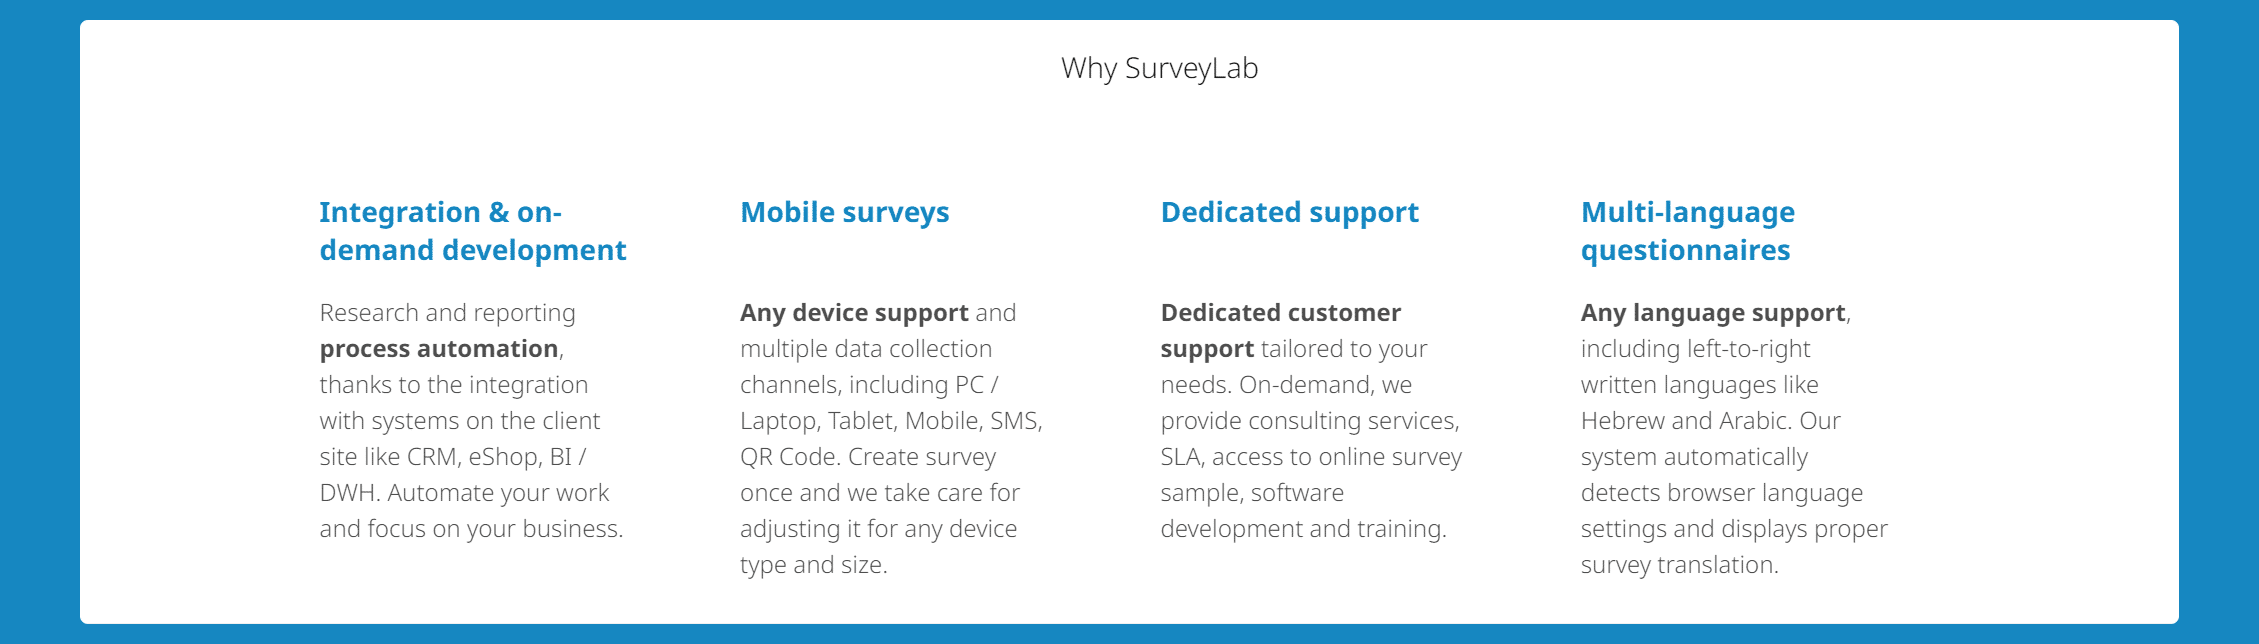 SurveyLab's features